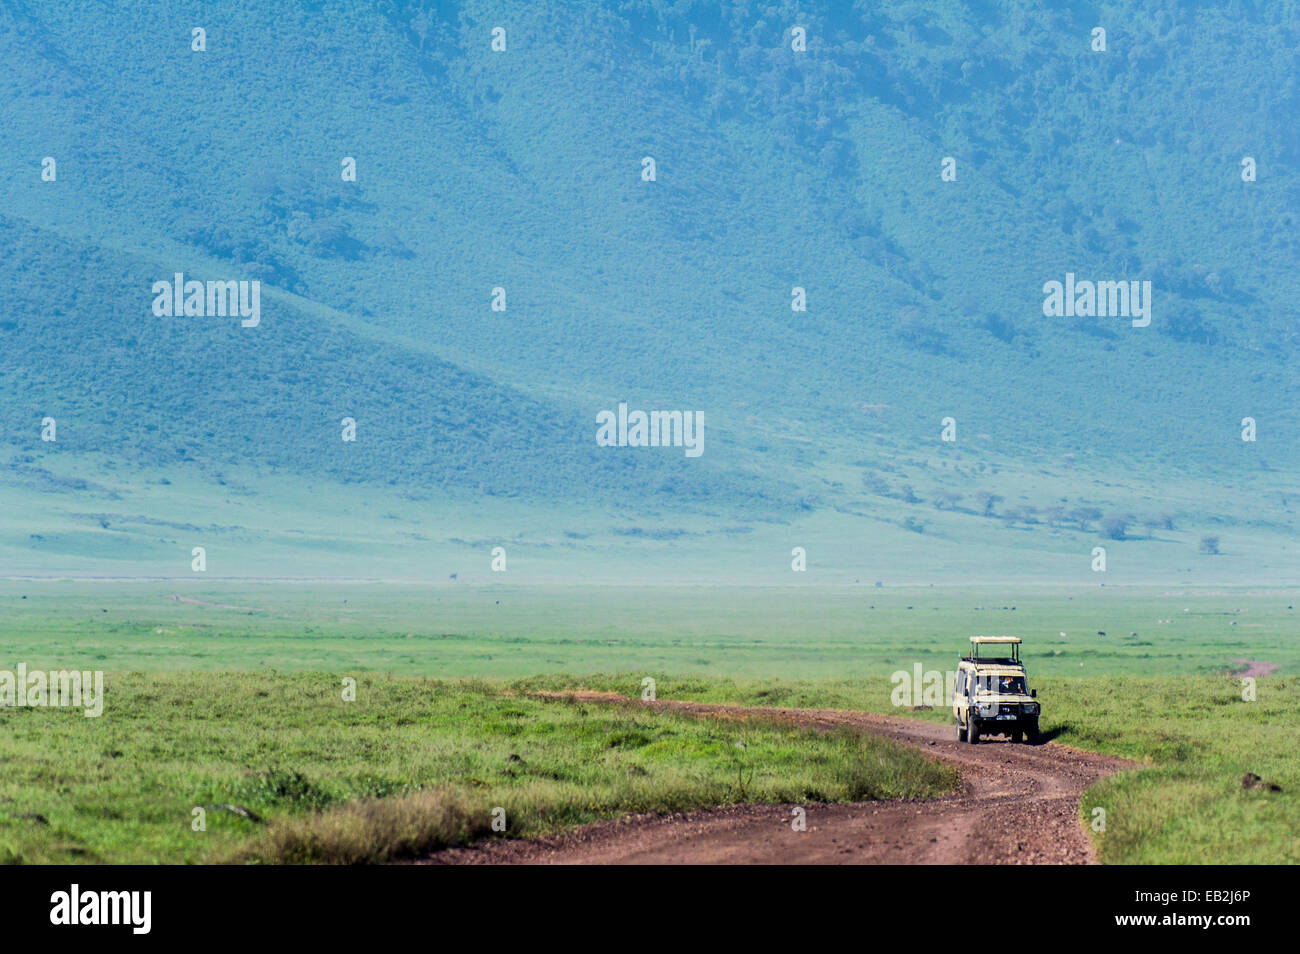 A safari vehicle crosses the savannah plain on the floor of a volcano caldera. Stock Photo